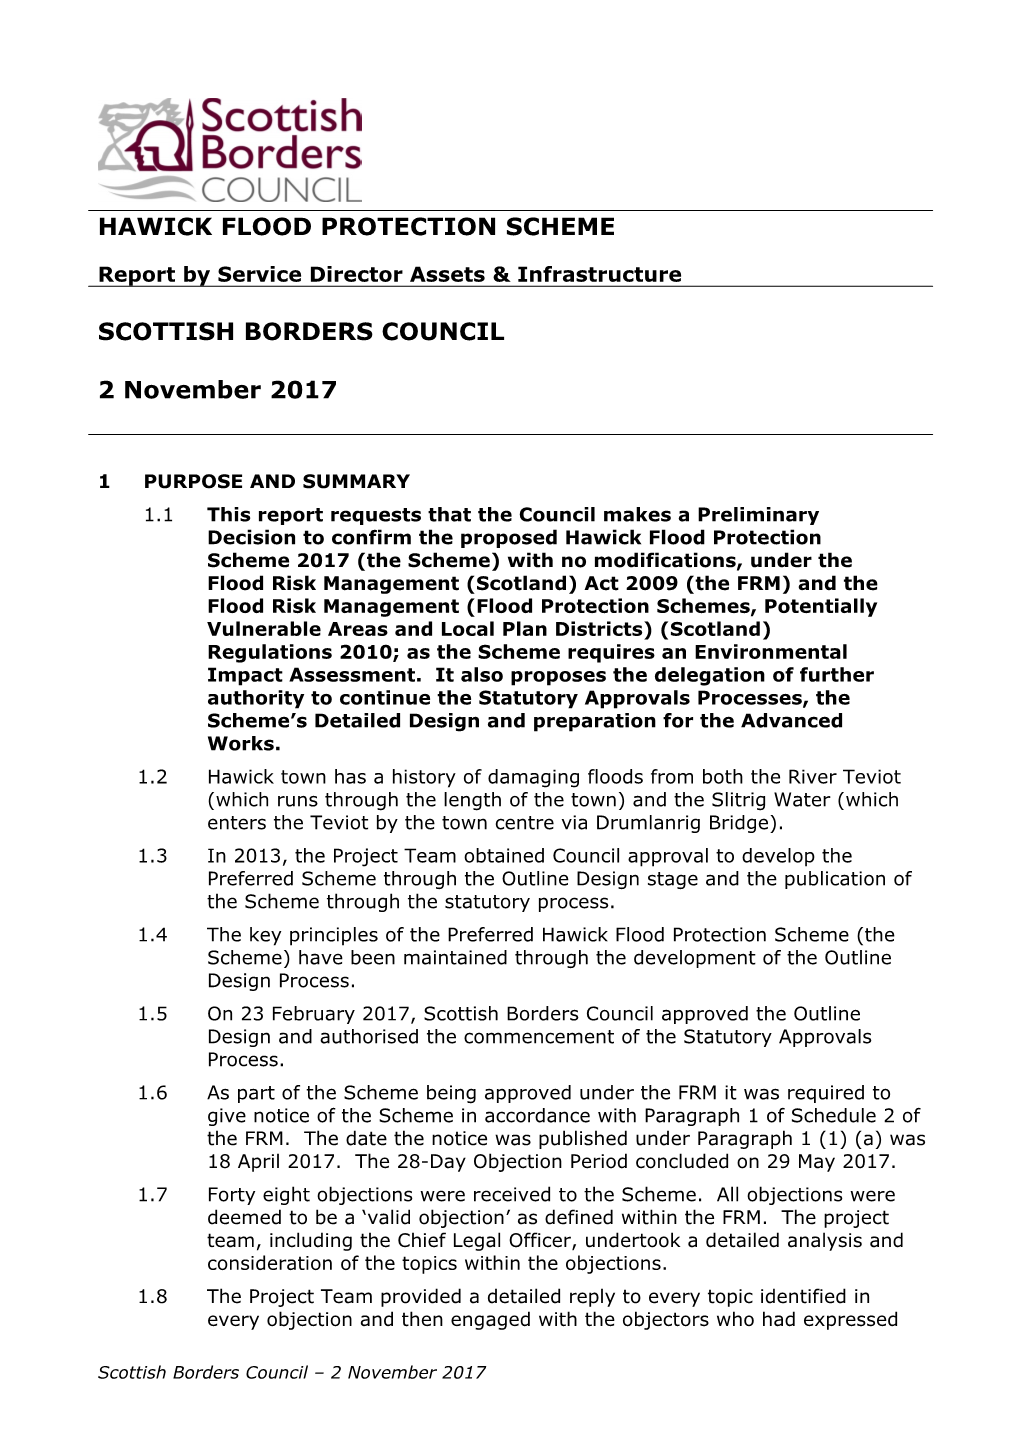 Hawick Flood Protection Scheme